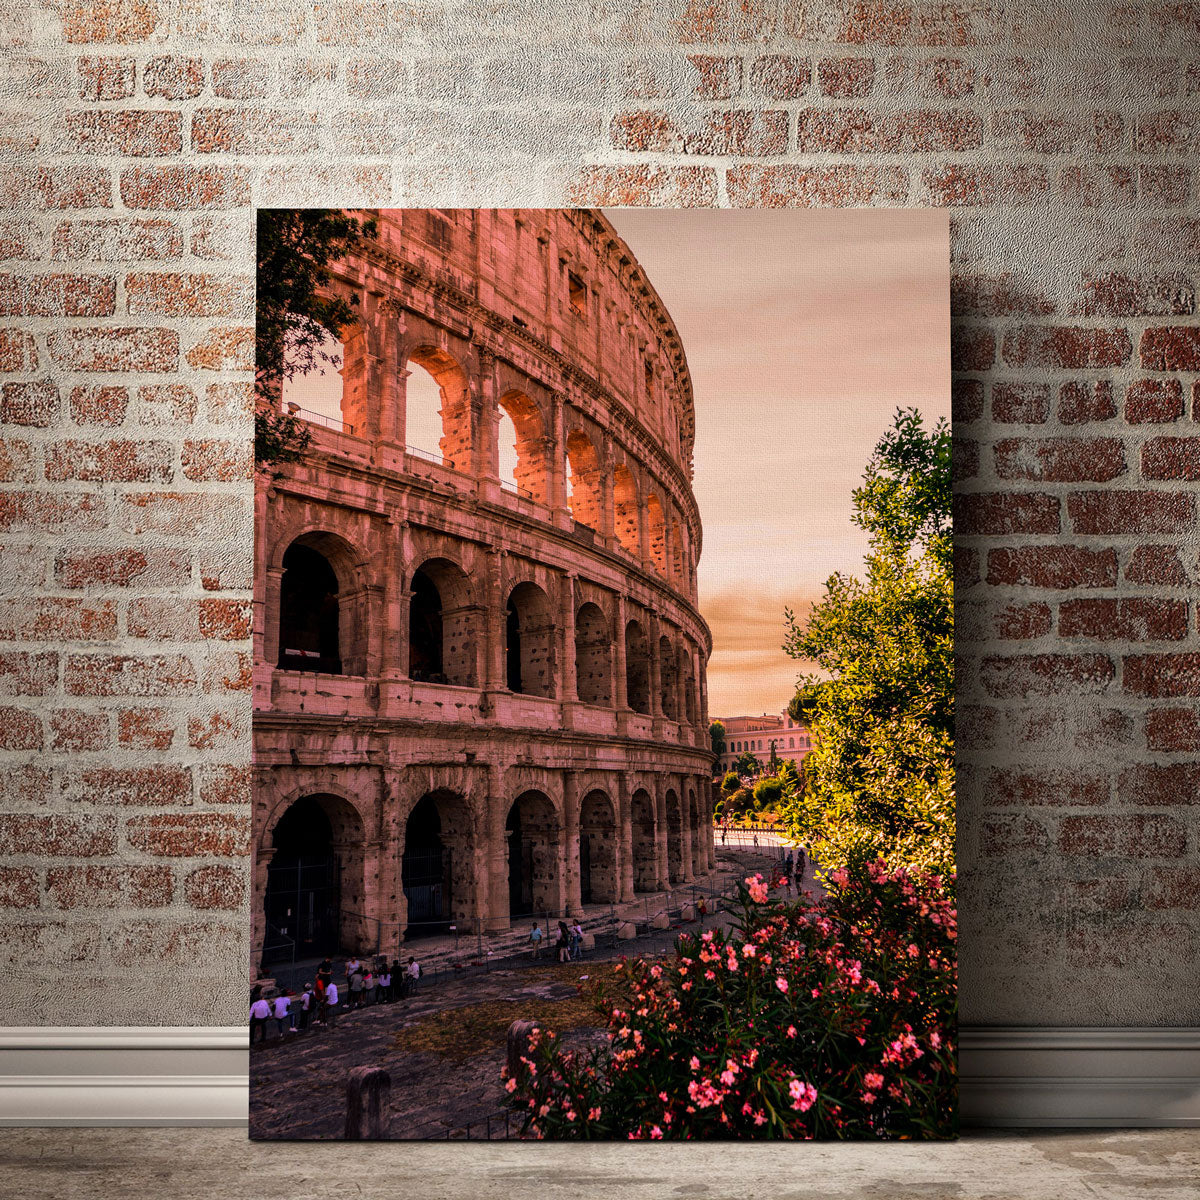 The Colosseum Roma